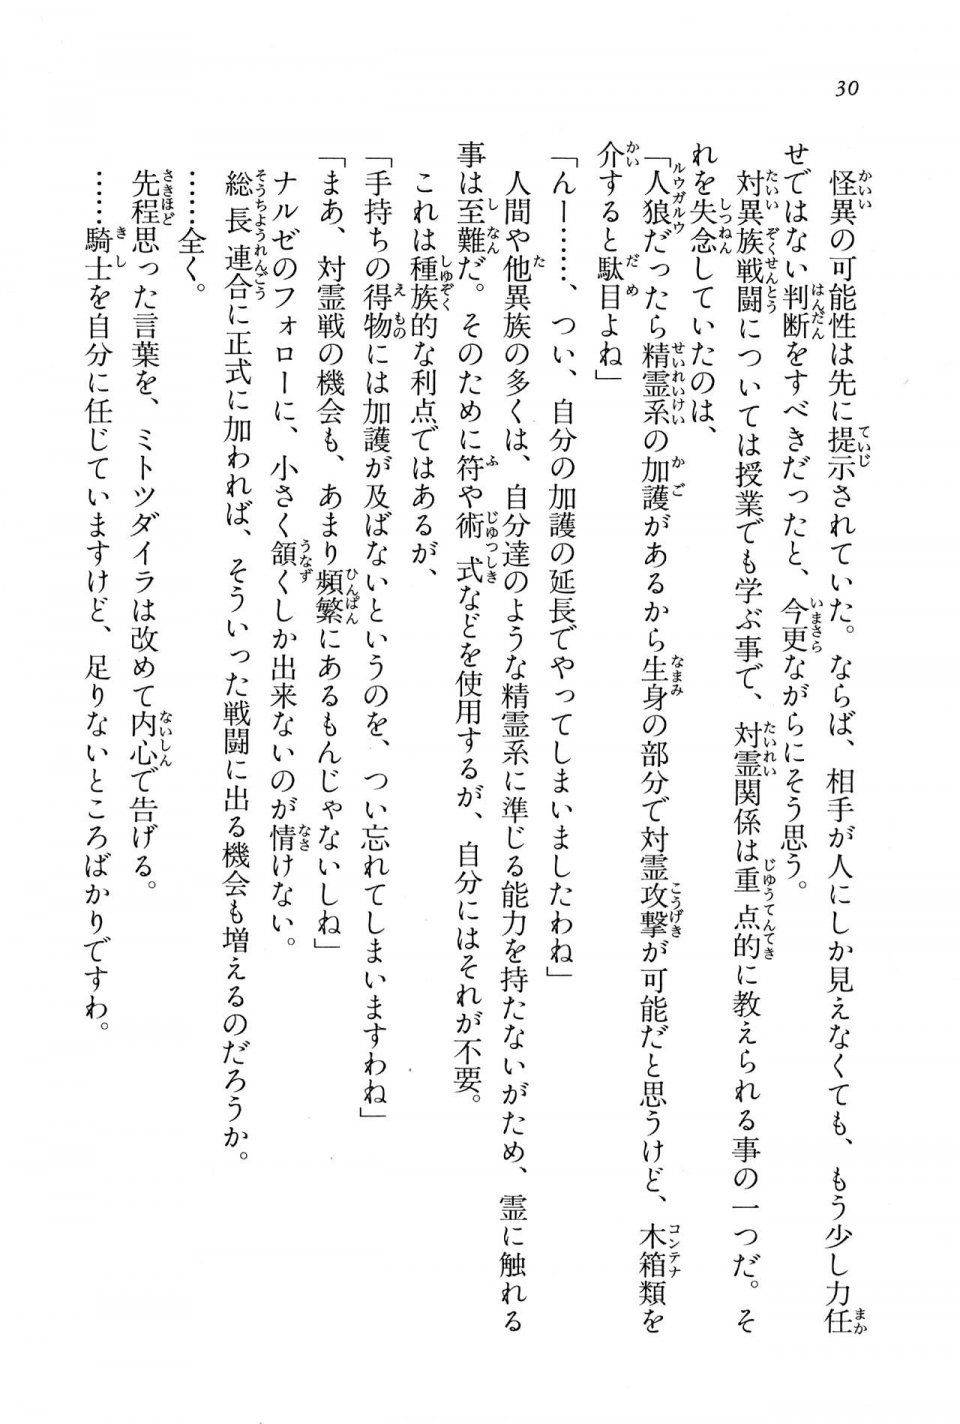 Kyoukai Senjou no Horizon BD Special Mininovel Vol 6(3B) - Photo #34